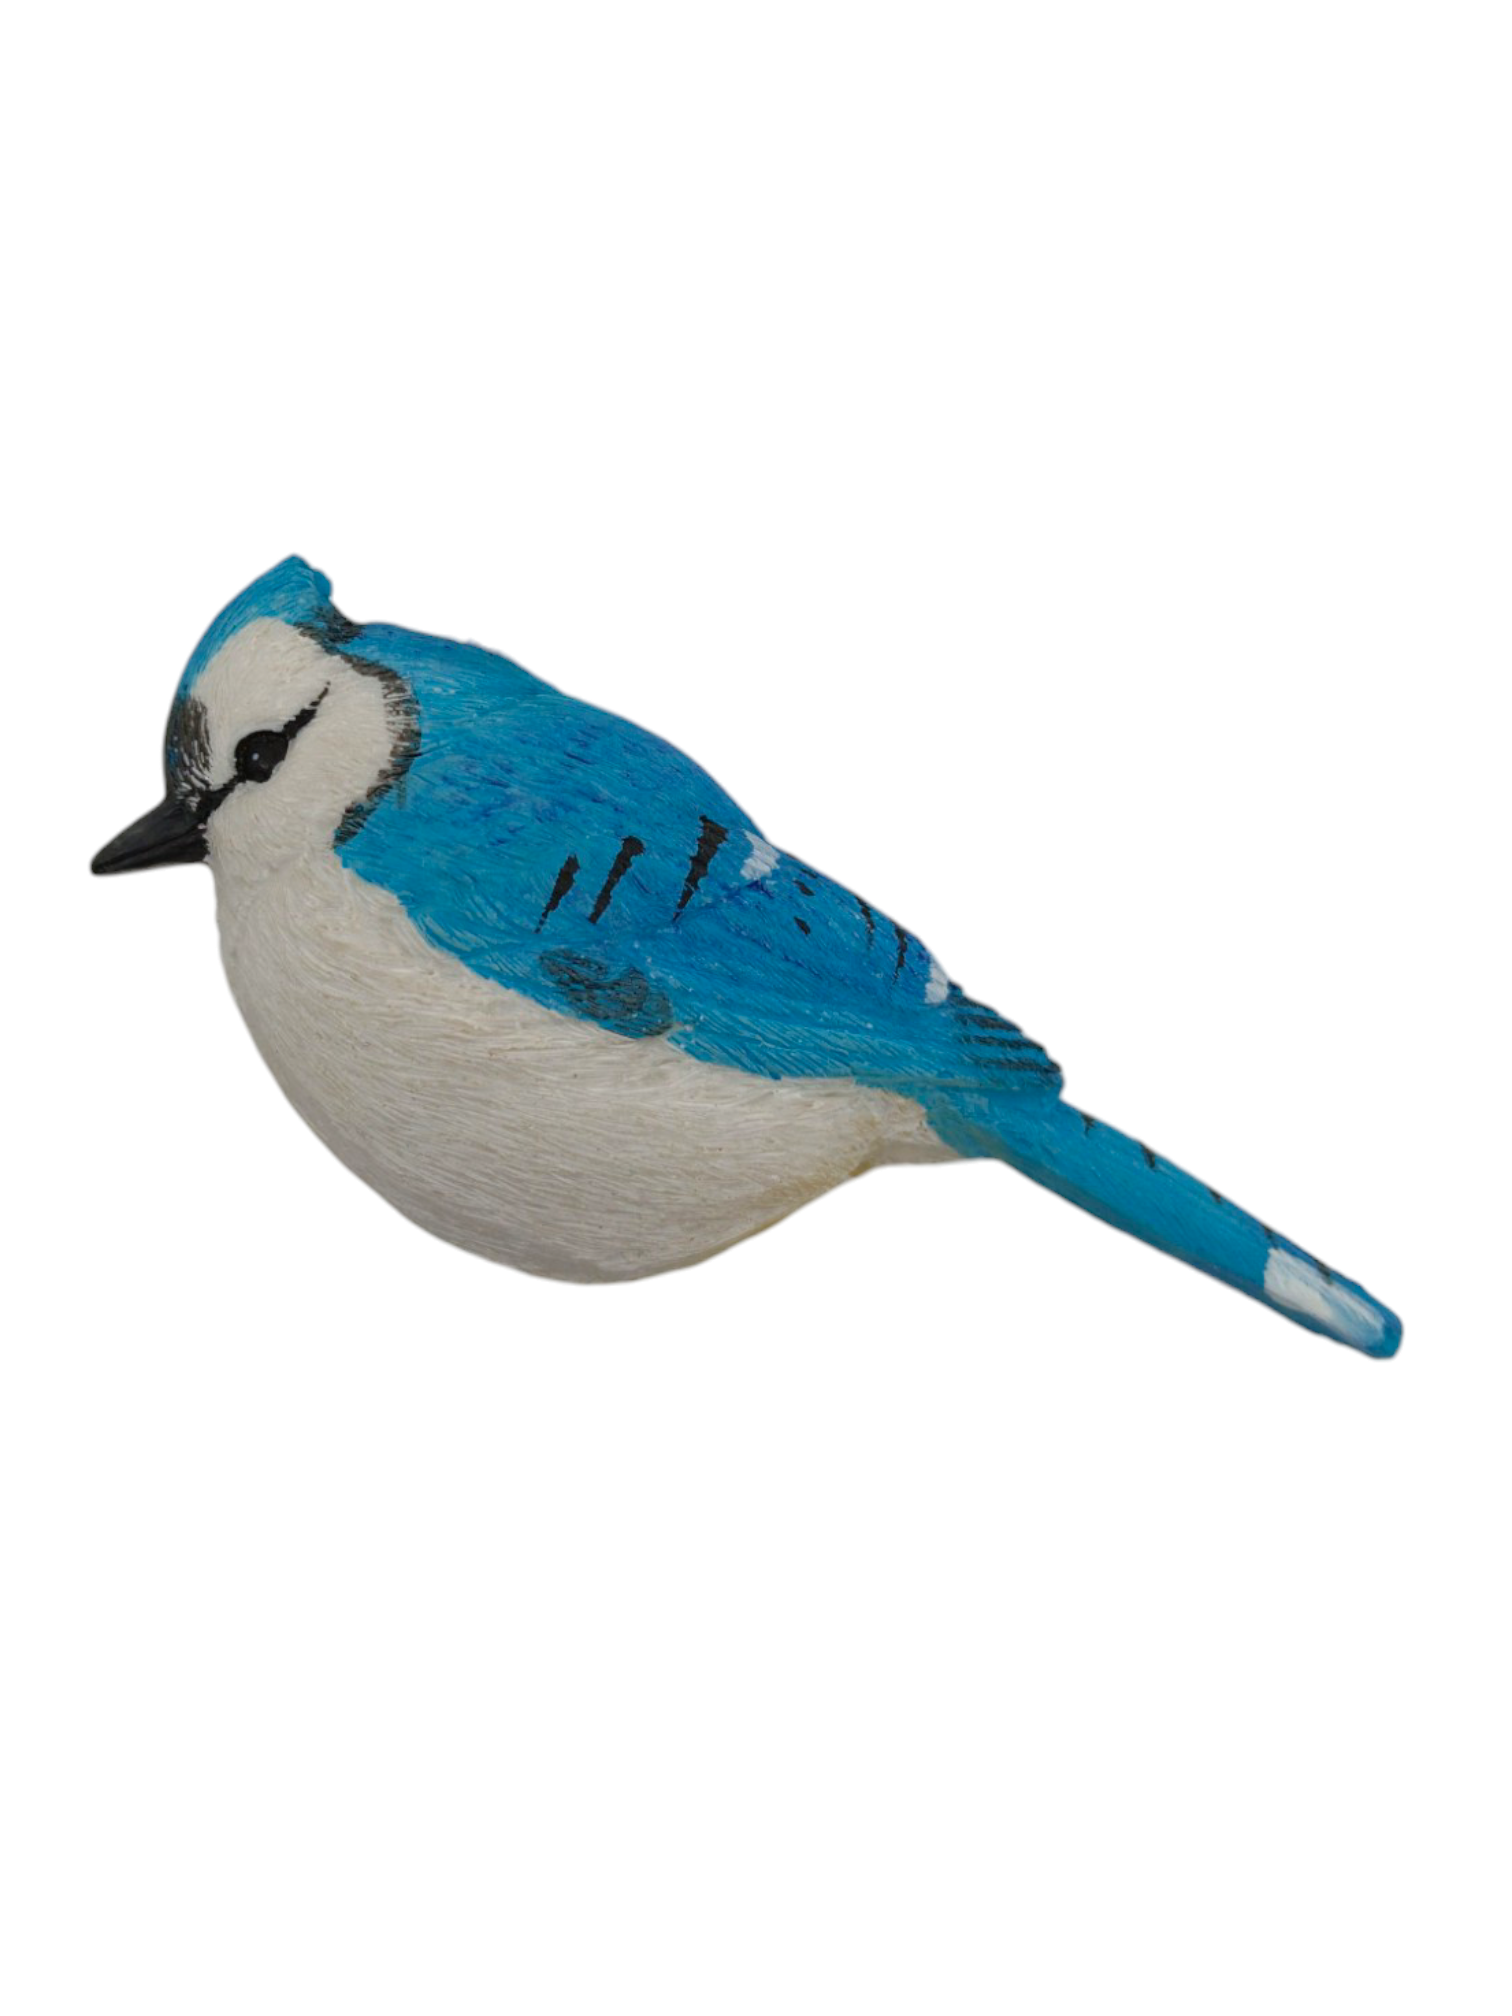 Ornament: 4.5" Blue Jay Songbird